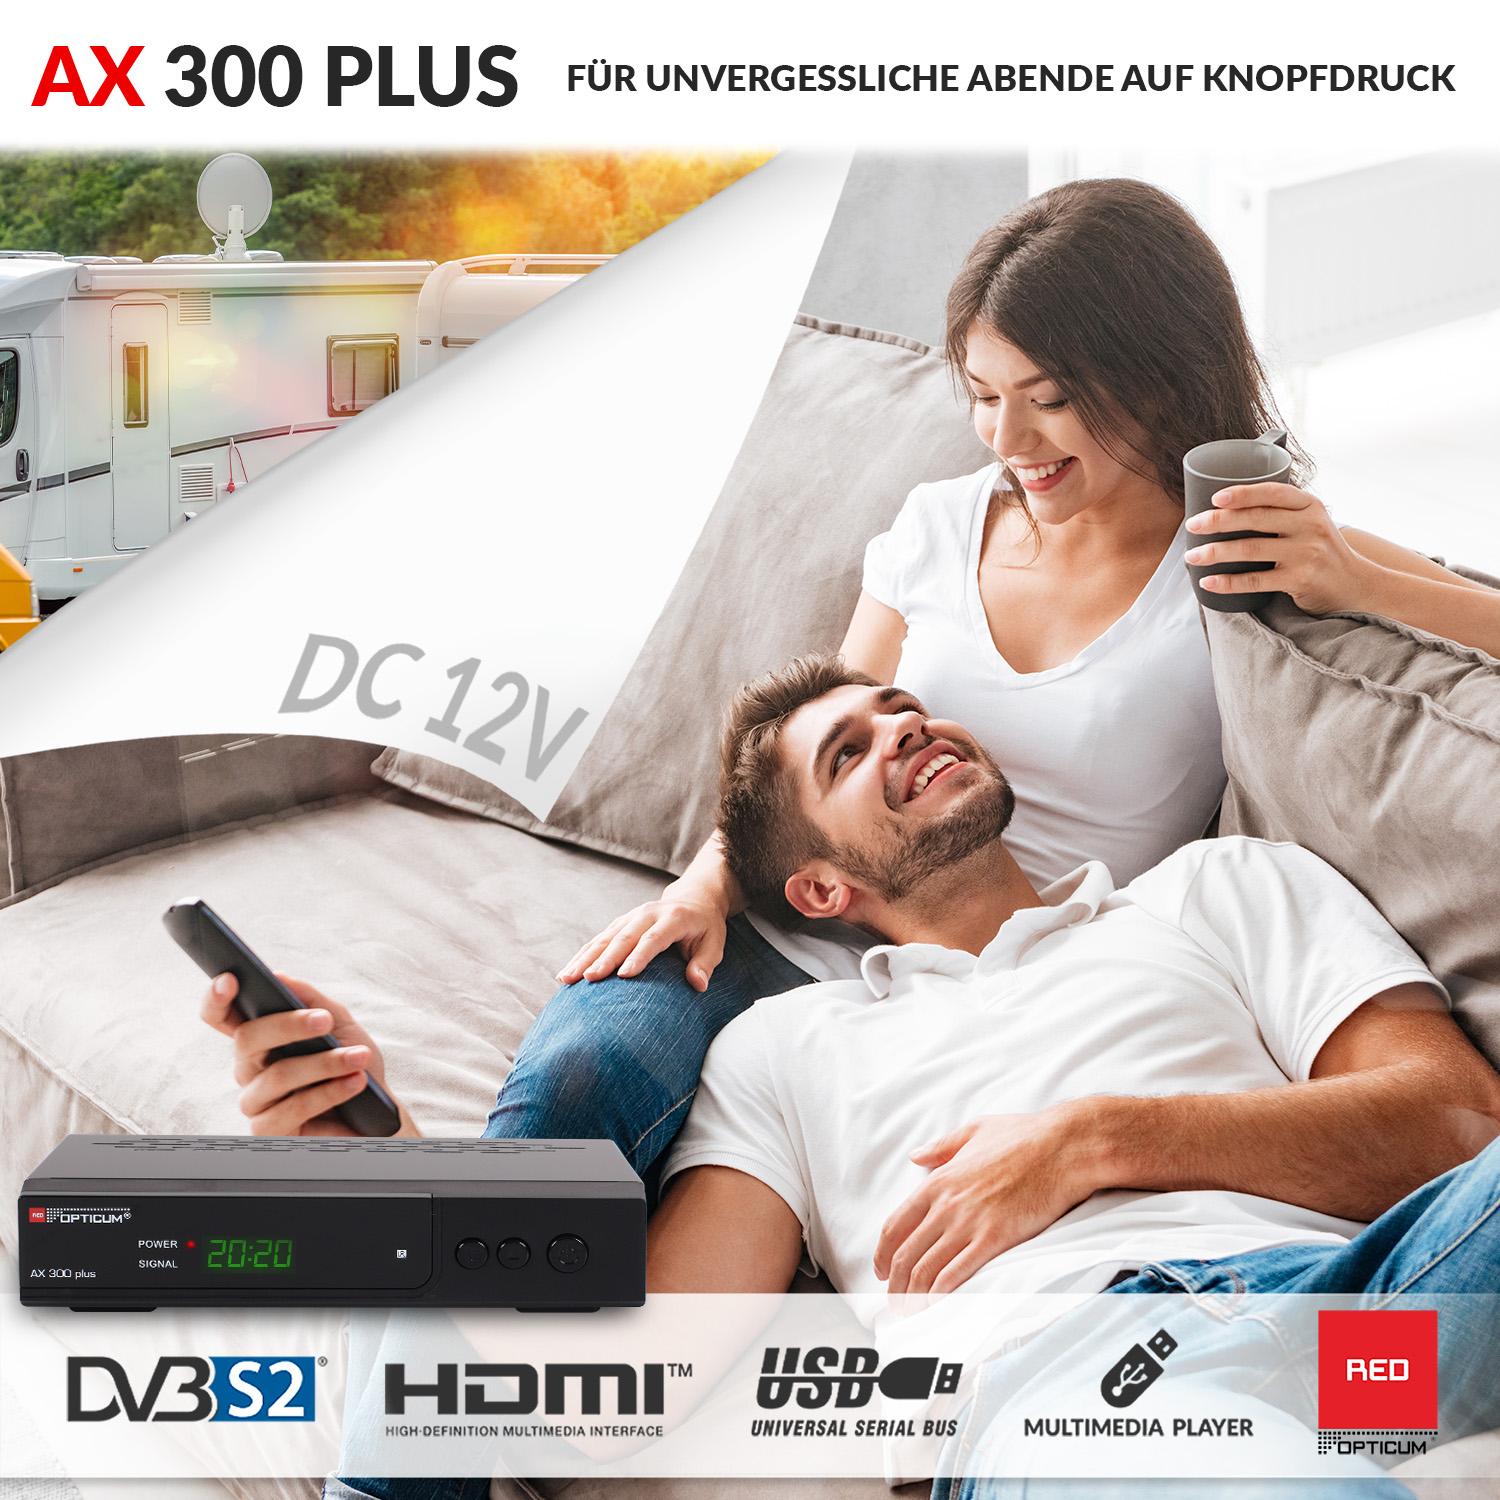 RED OPTICUM AX schwarz) DVB-S DVB-S2, 300 1080p Satelliten-Receiver Receiver Receiver Sat PVR Plus PVR-Funktion, - DVB-S, Digitaler HD (HDTV, USB-schwarz mit I -HDMI-SCART HD